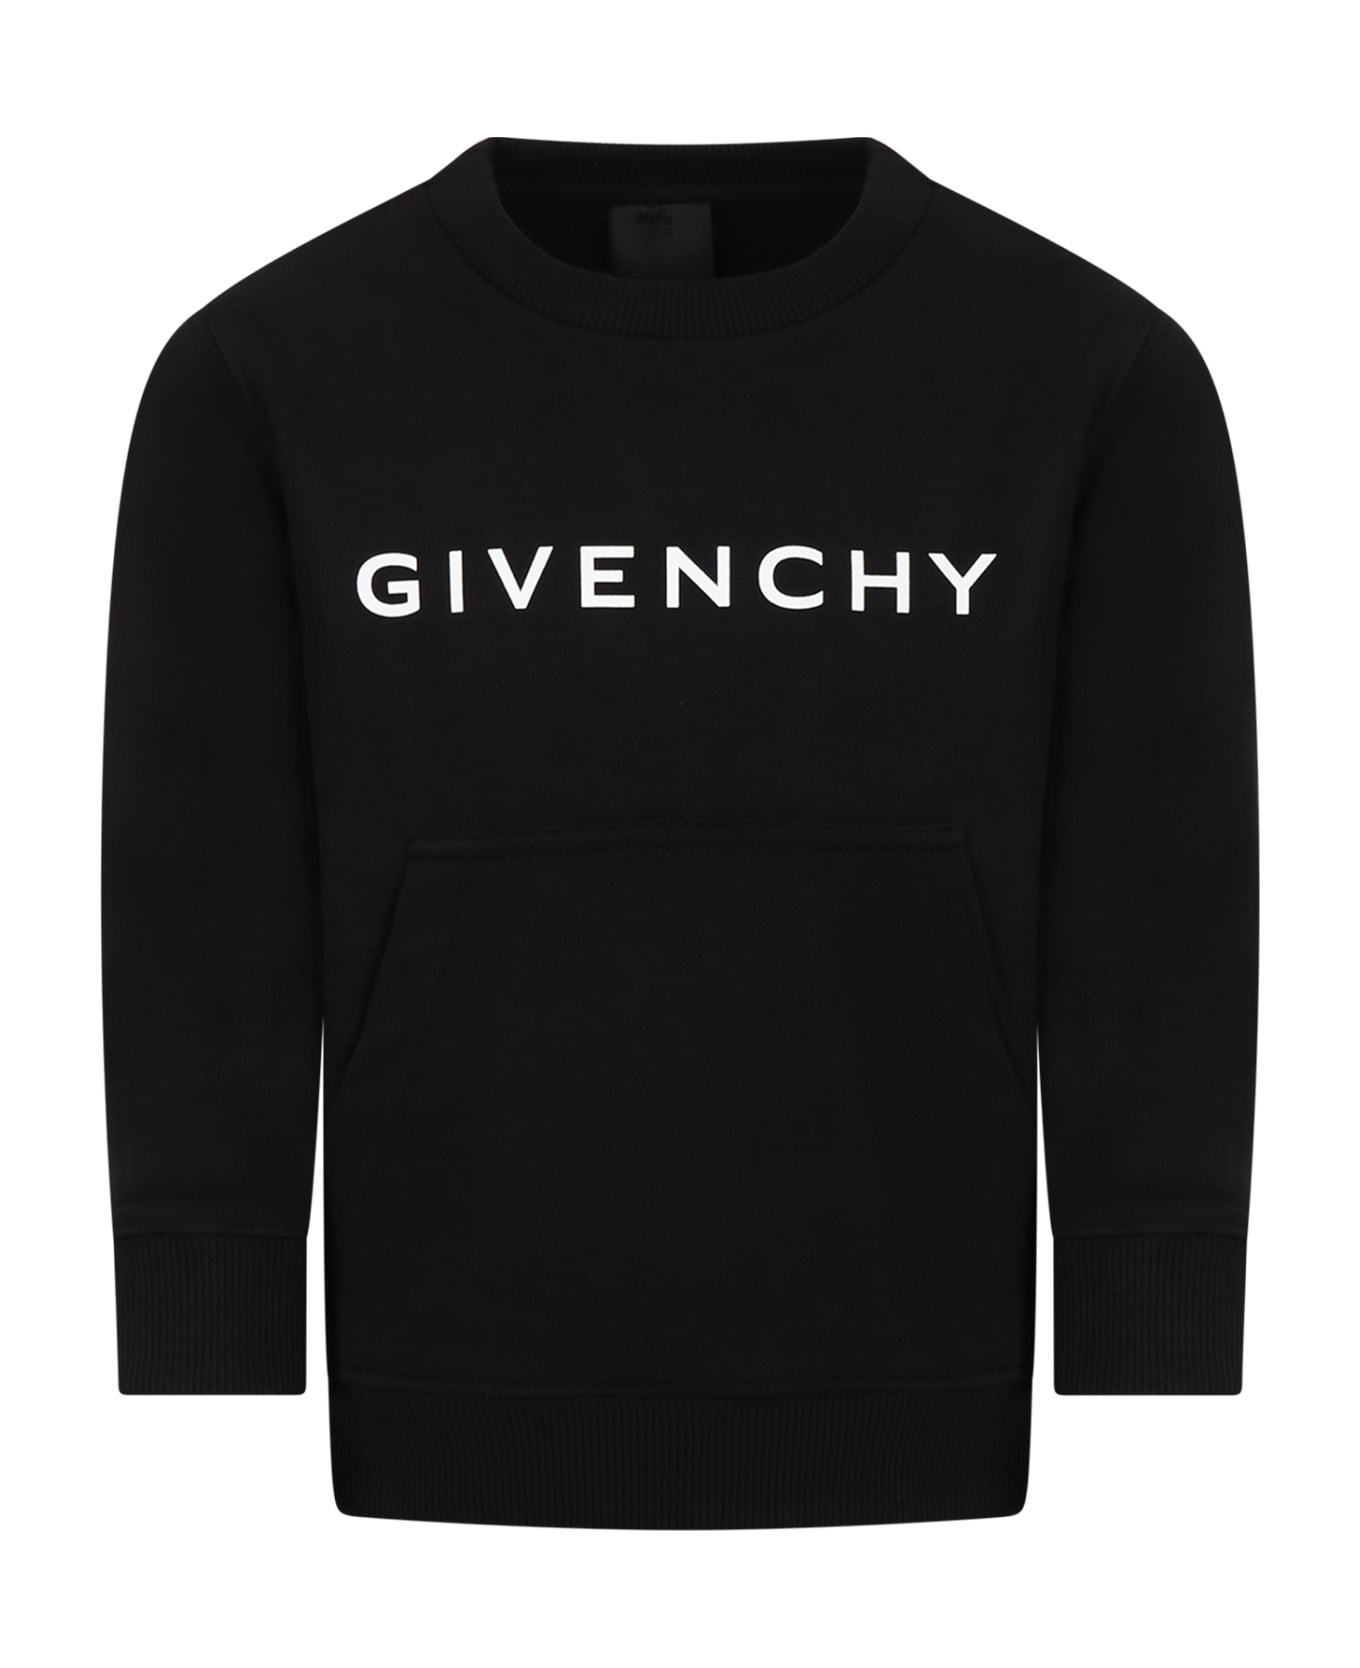 Givenchy Balck Sweatshirt For Kids With 101 Dalmatians Print And Logo - Black